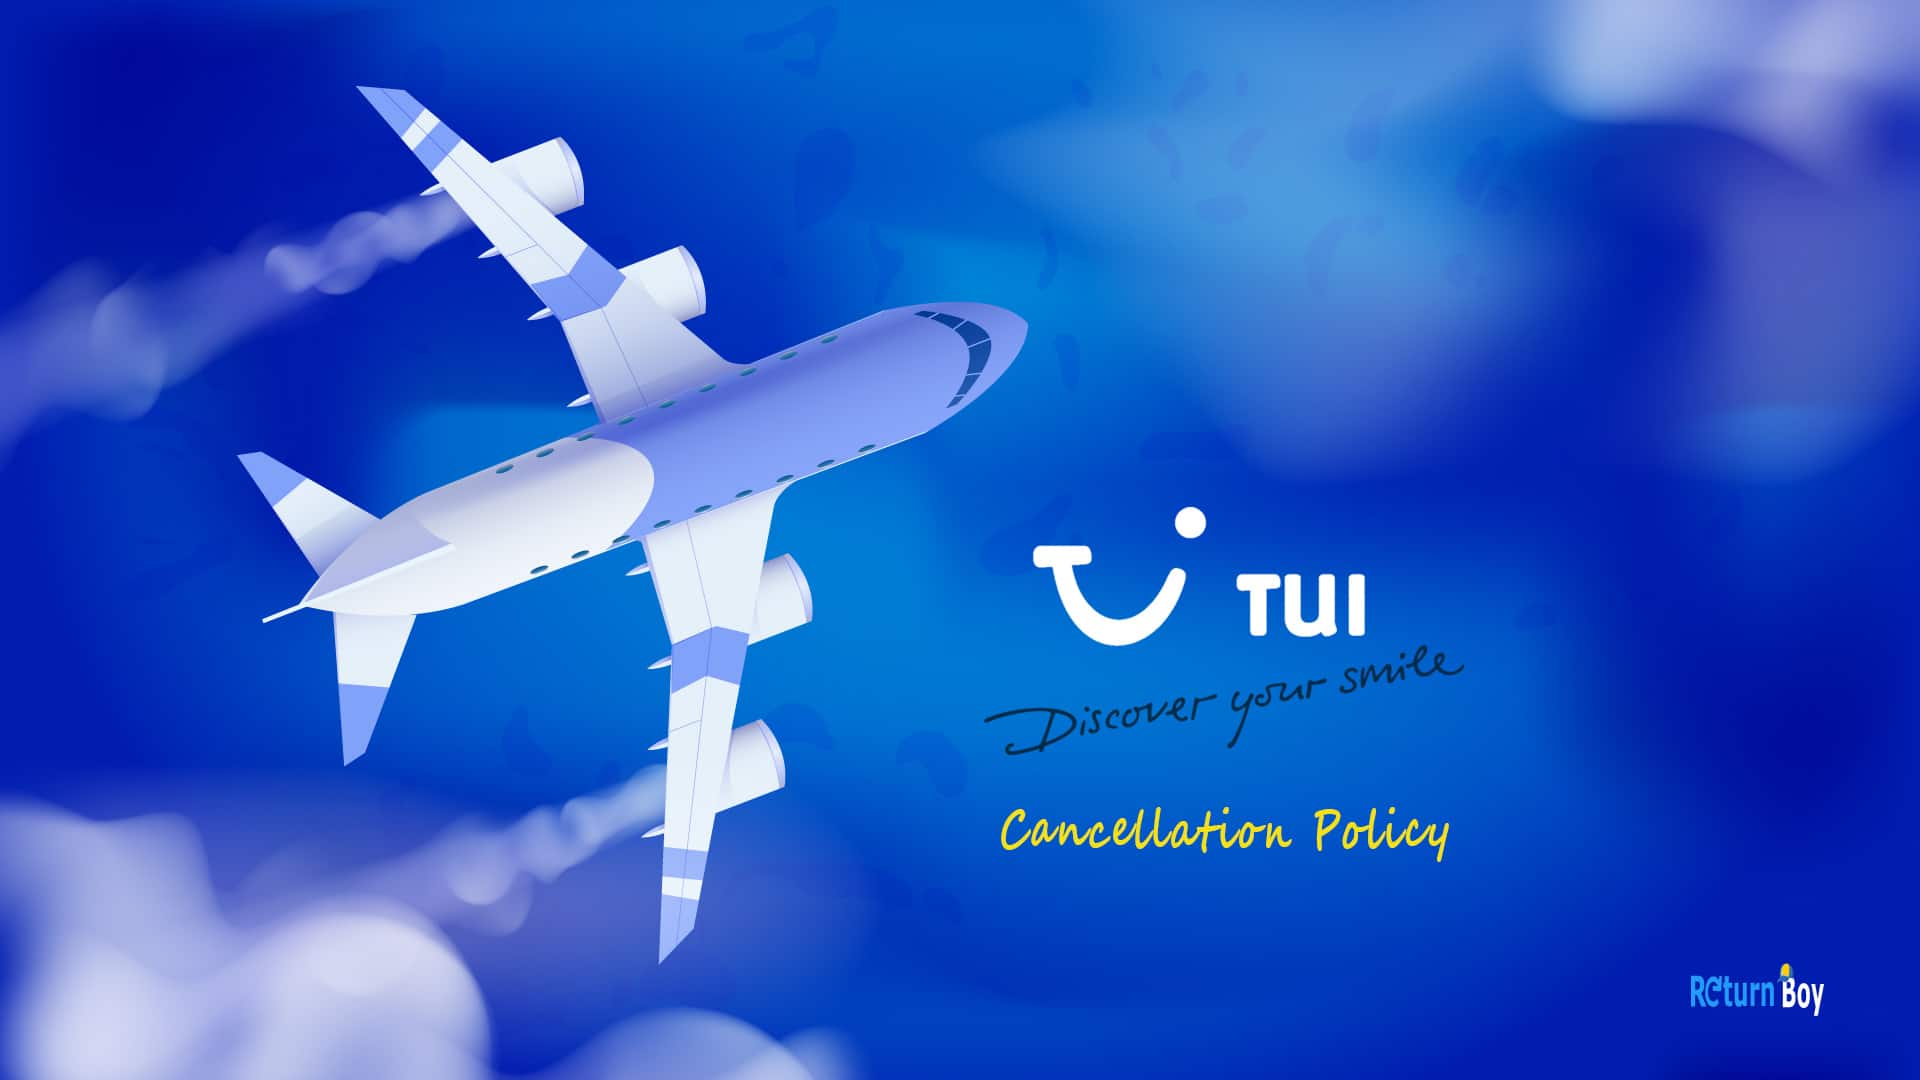 TUI Cancellation Policy